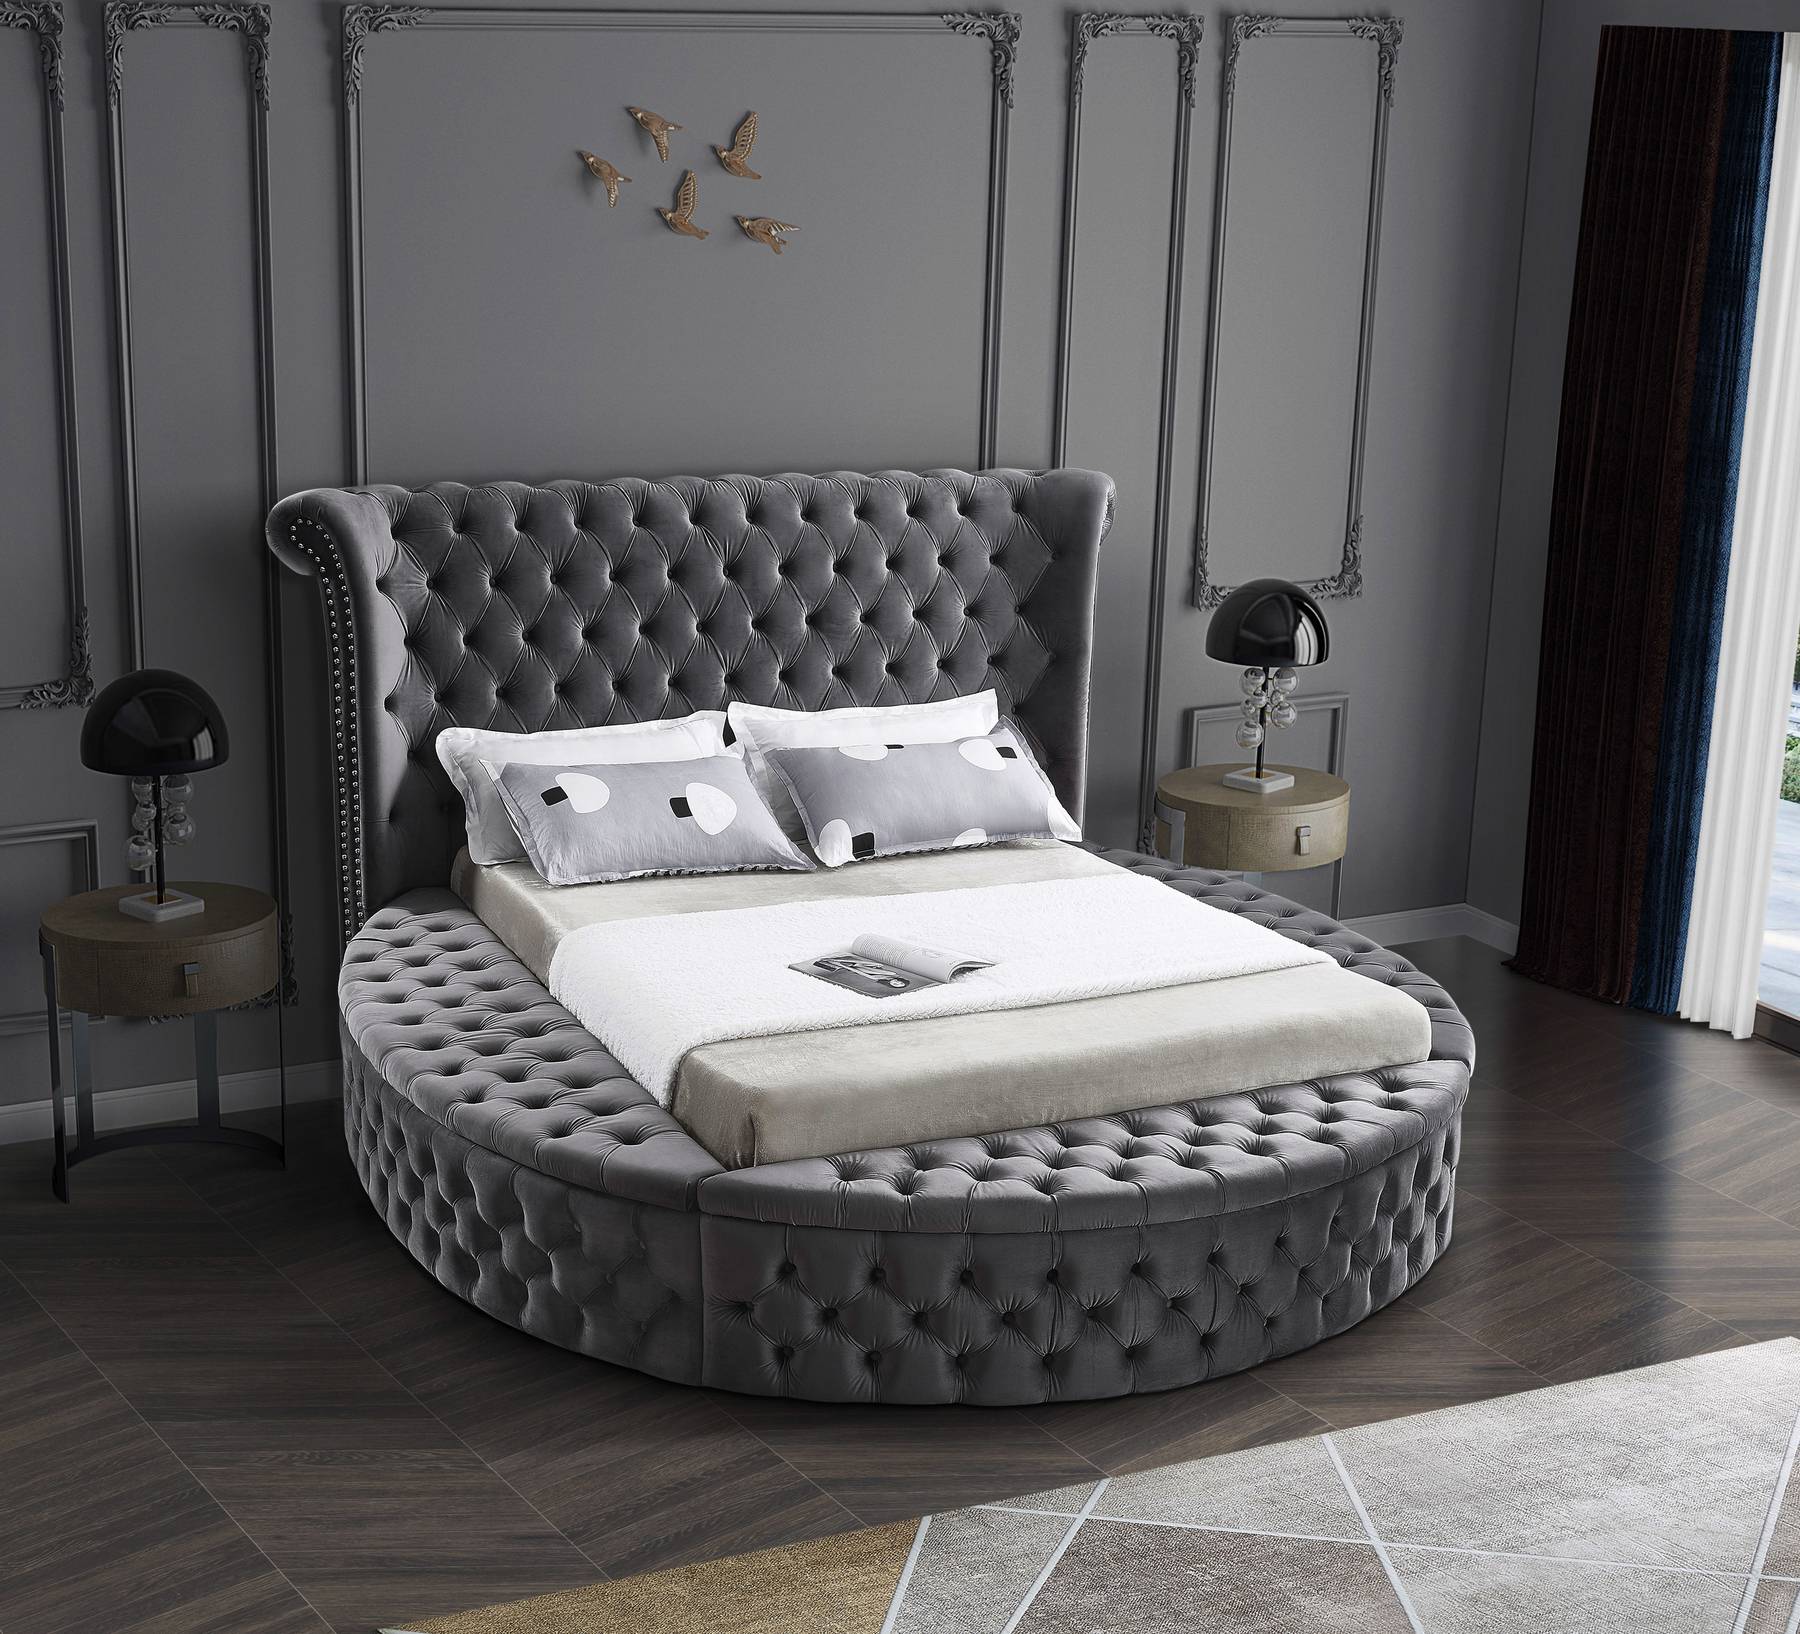 Luxurious grey round bed